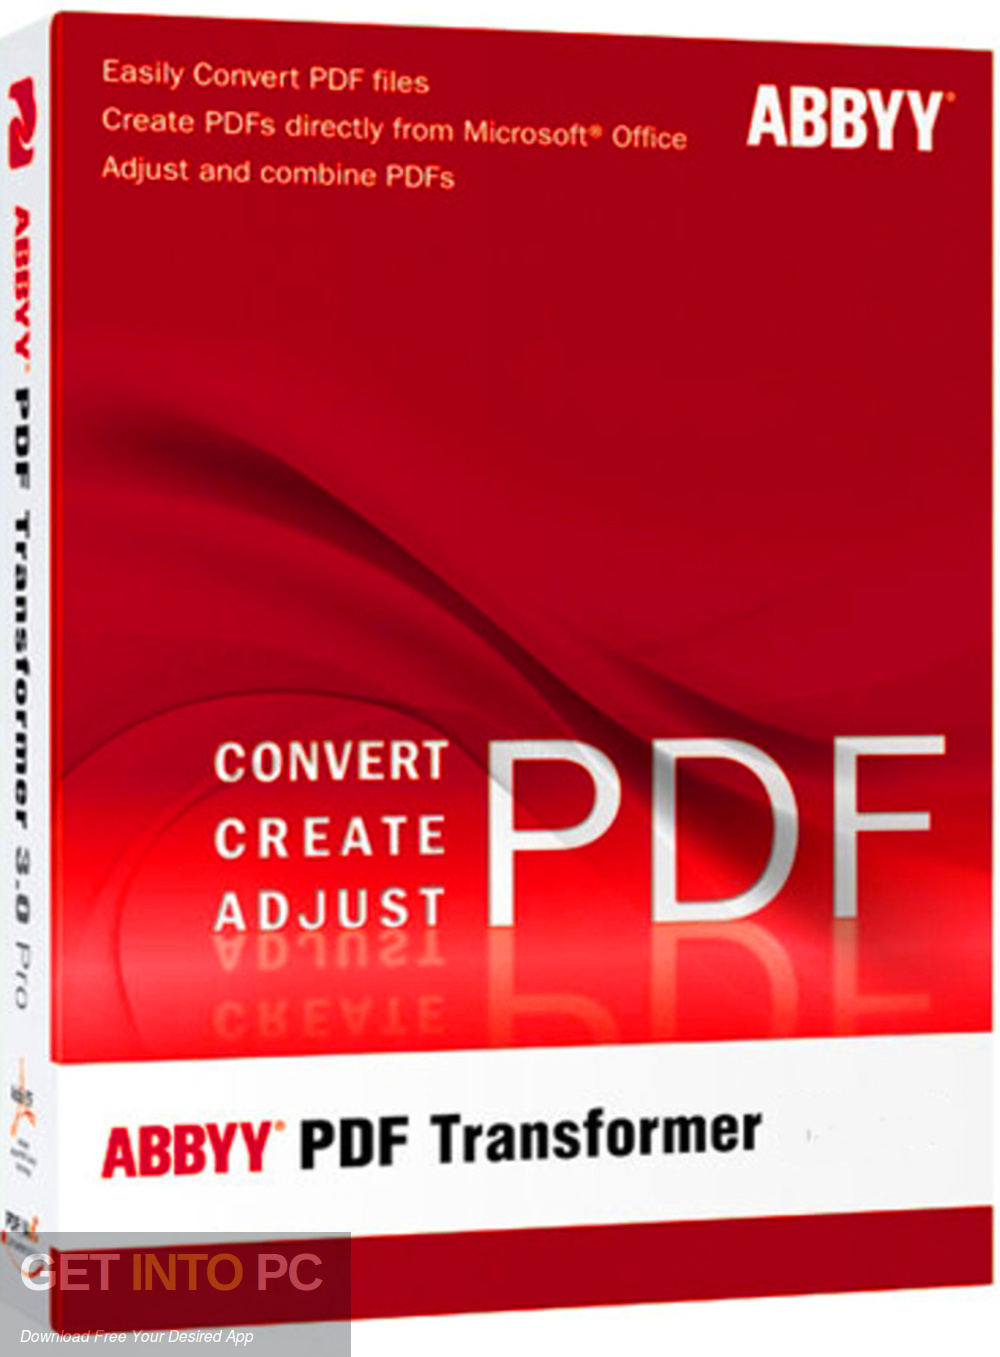 ABBYY PDF Transformer Free Download-GetintoPC.com